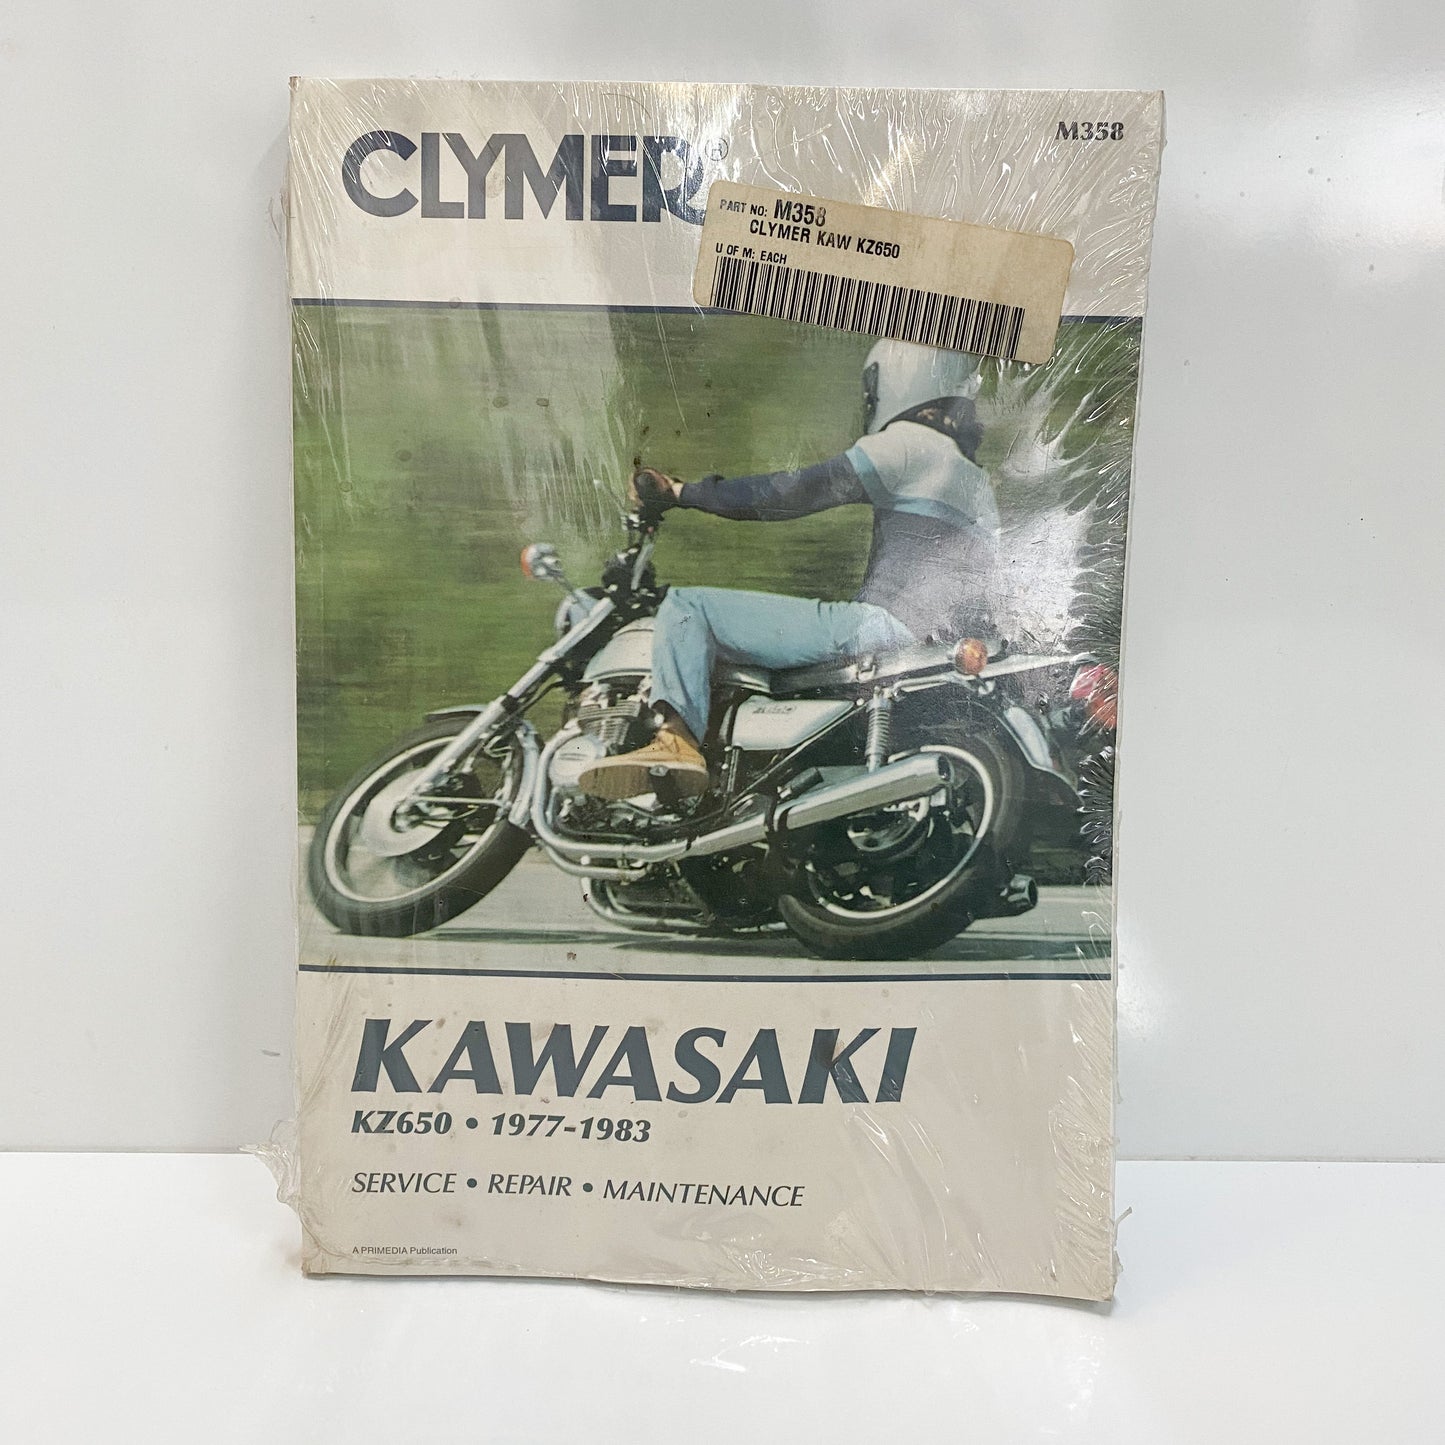 Clymer Kawasaki KZ650 Motorcycle Repair Manual M358